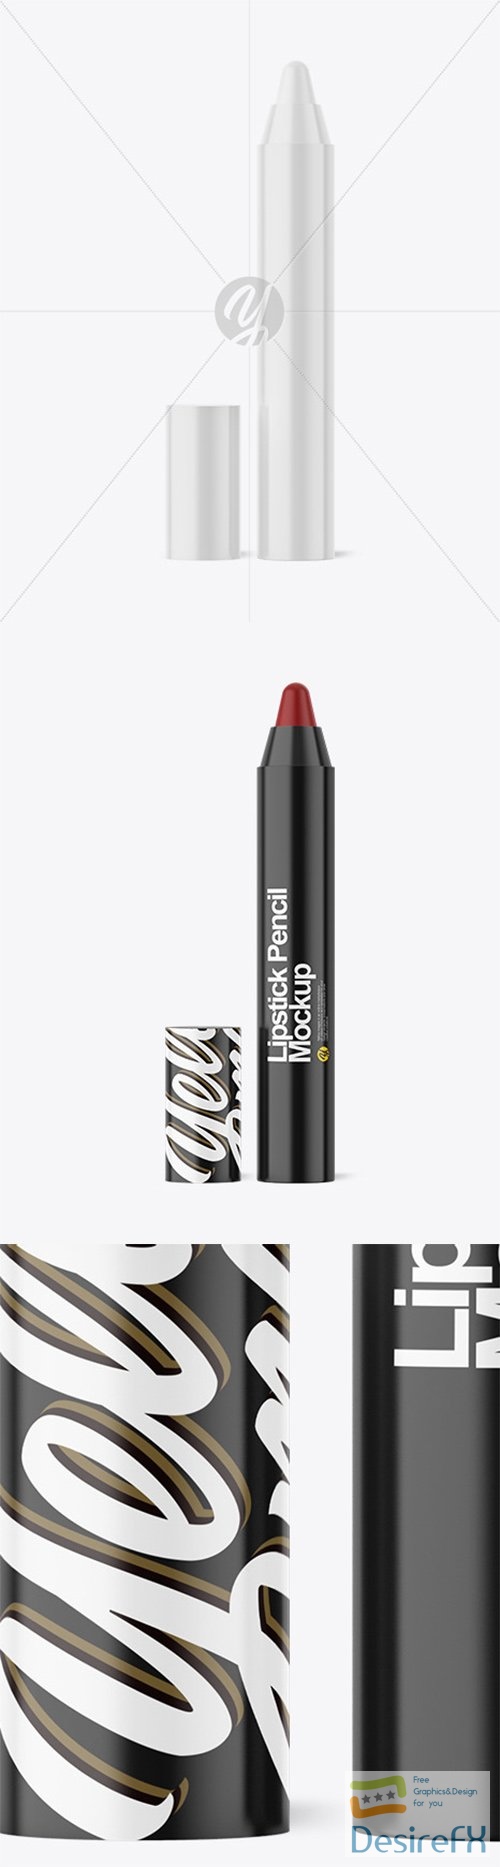 Glossy Lipstick Pencil Mockup 82146 TIF